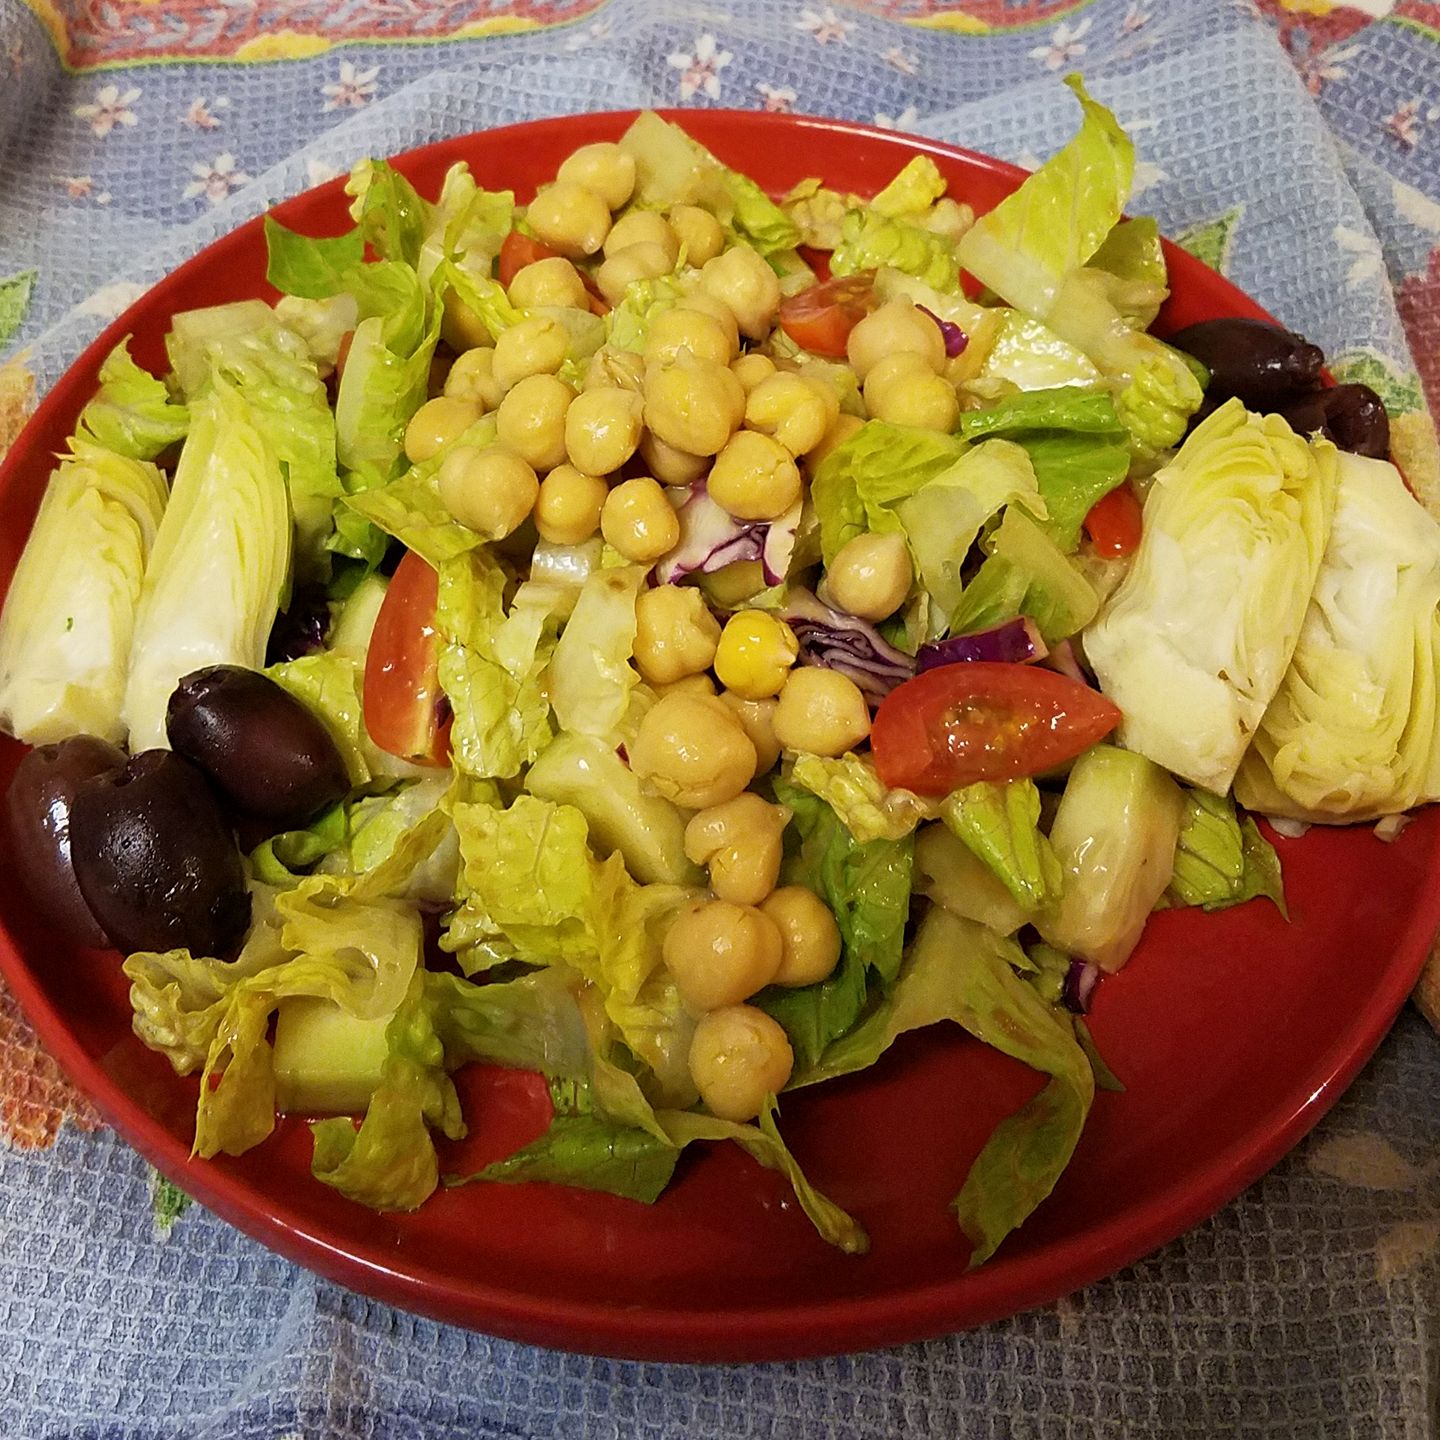 Greek salad with chickpeas. https://www.wocdetox.com/summer-5-day-detox.html